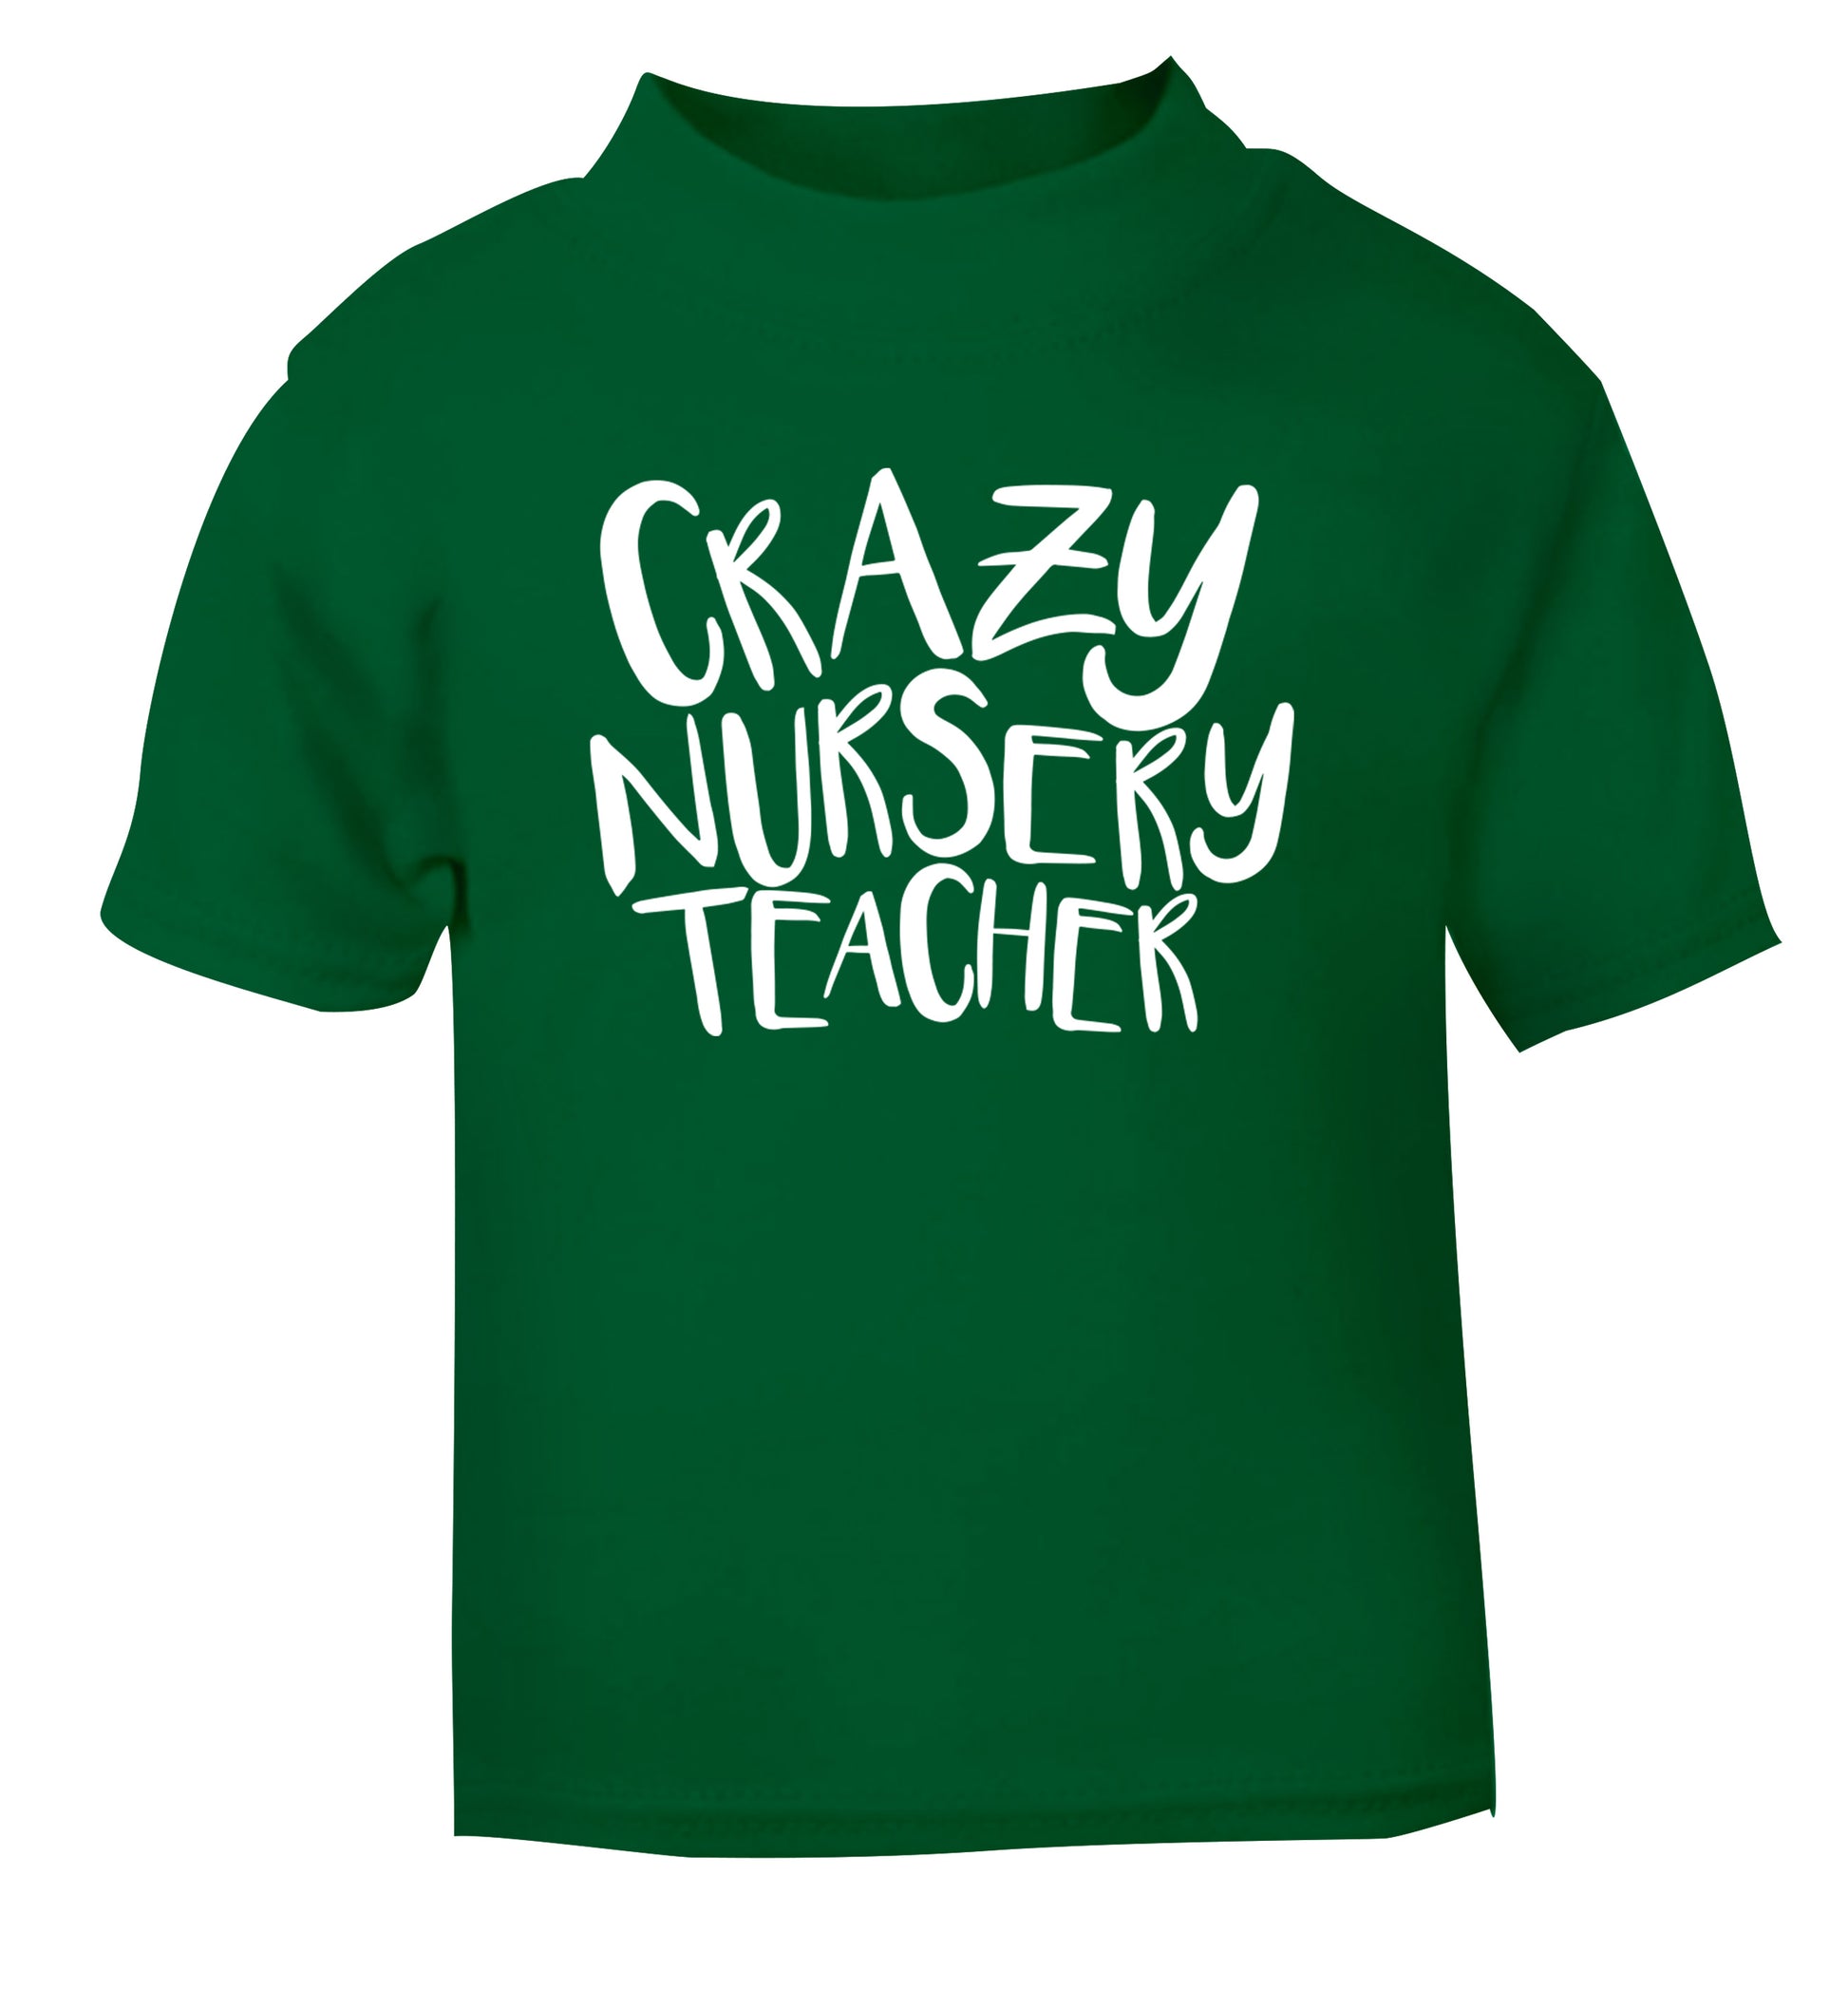 Crazy nursery teacher green Baby Toddler Tshirt 2 Years